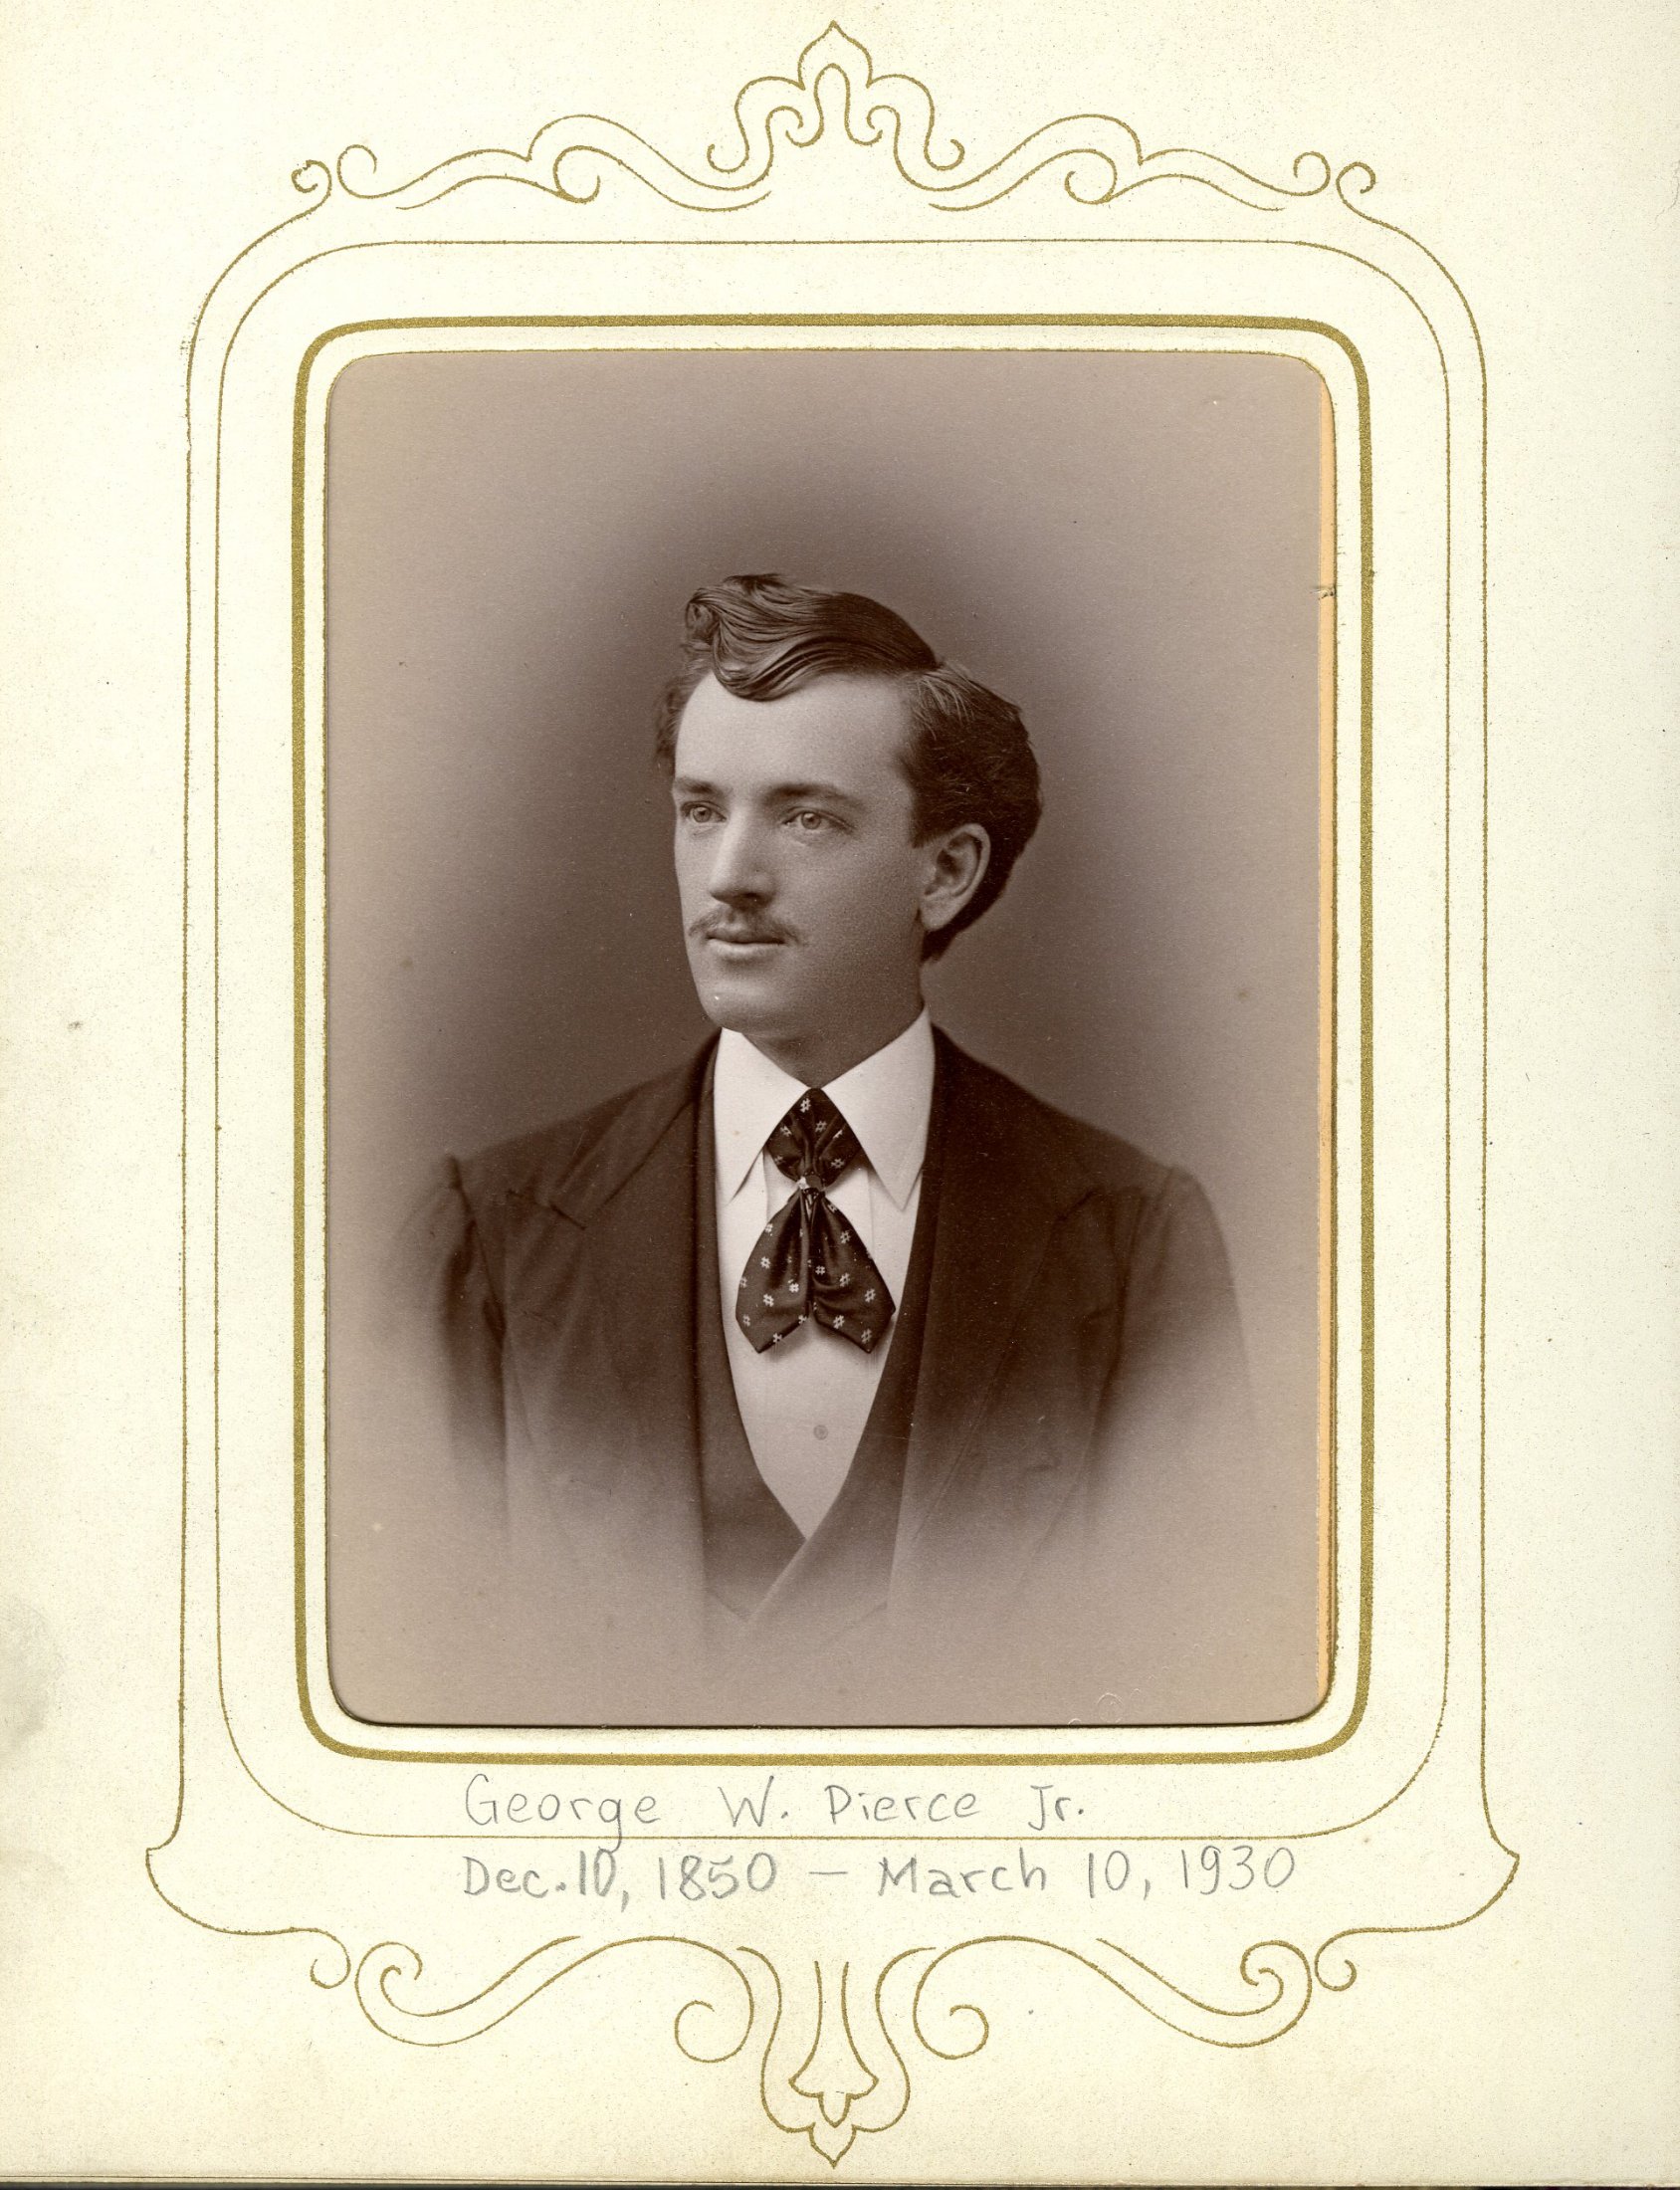 Photo of George W. Pierce Jr.